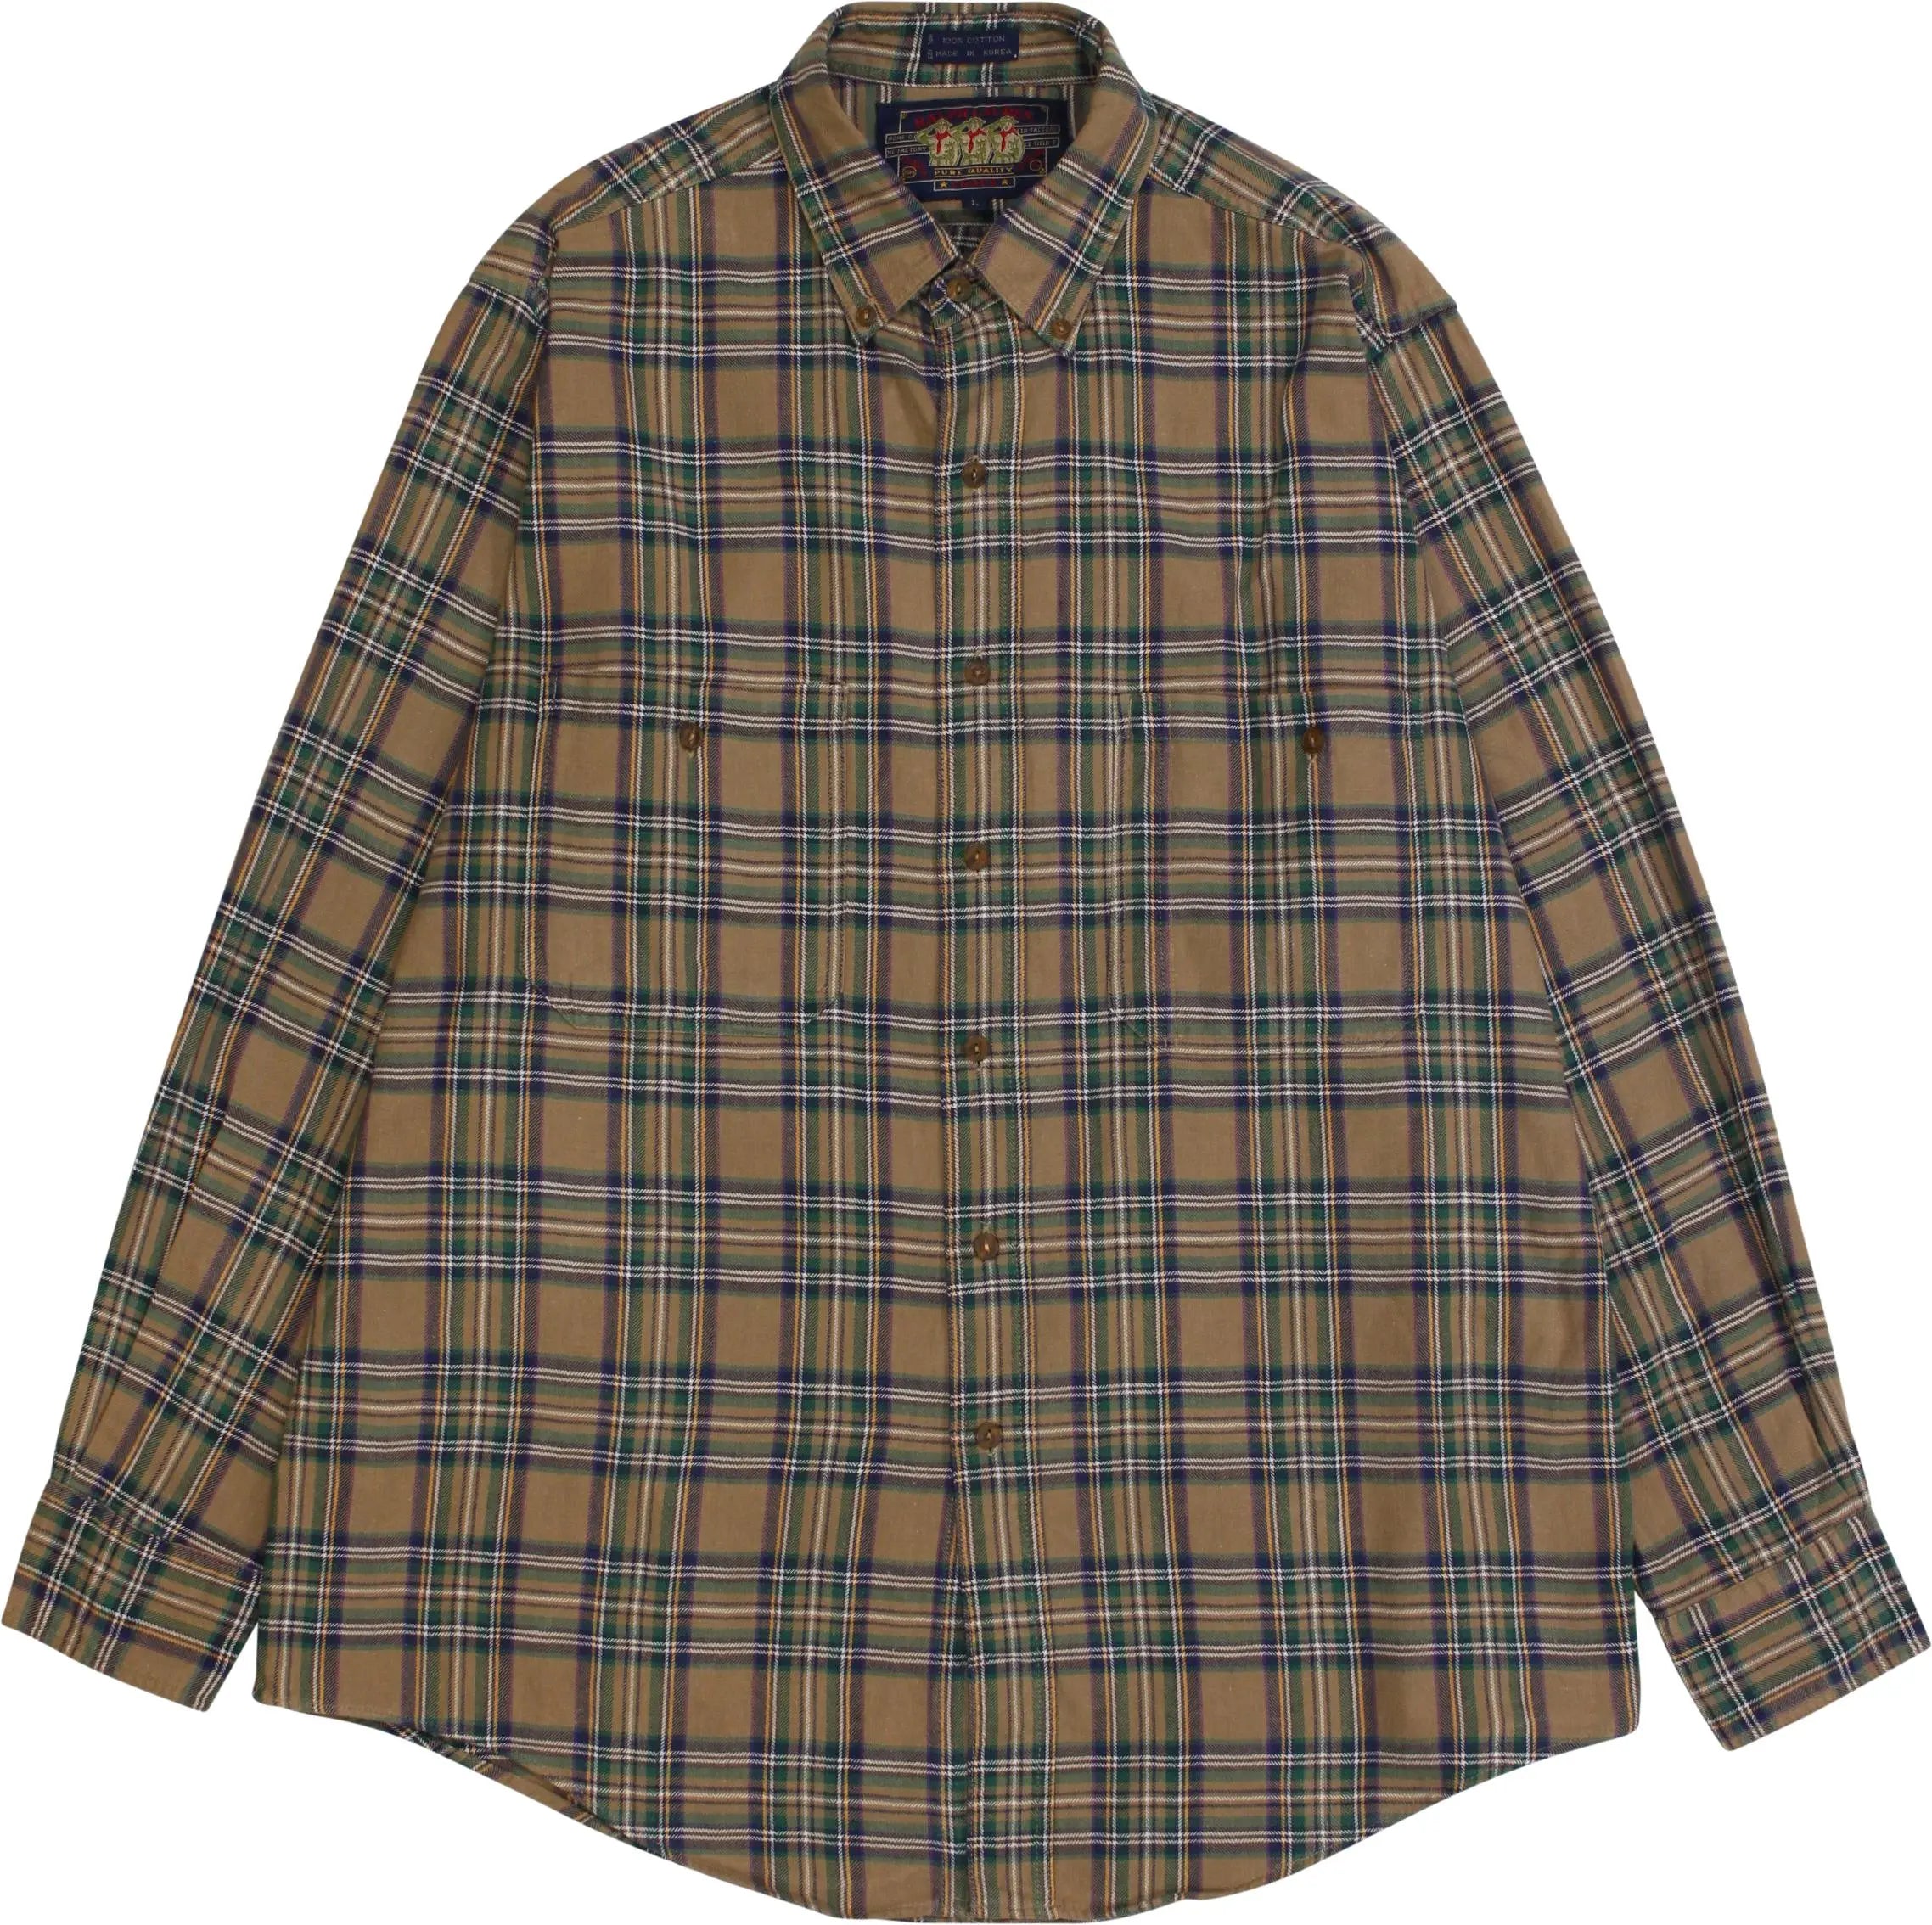 Ralph Lauren - 90s Flannel Shirt by Ralph Lauren- ThriftTale.com - Vintage and second handclothing